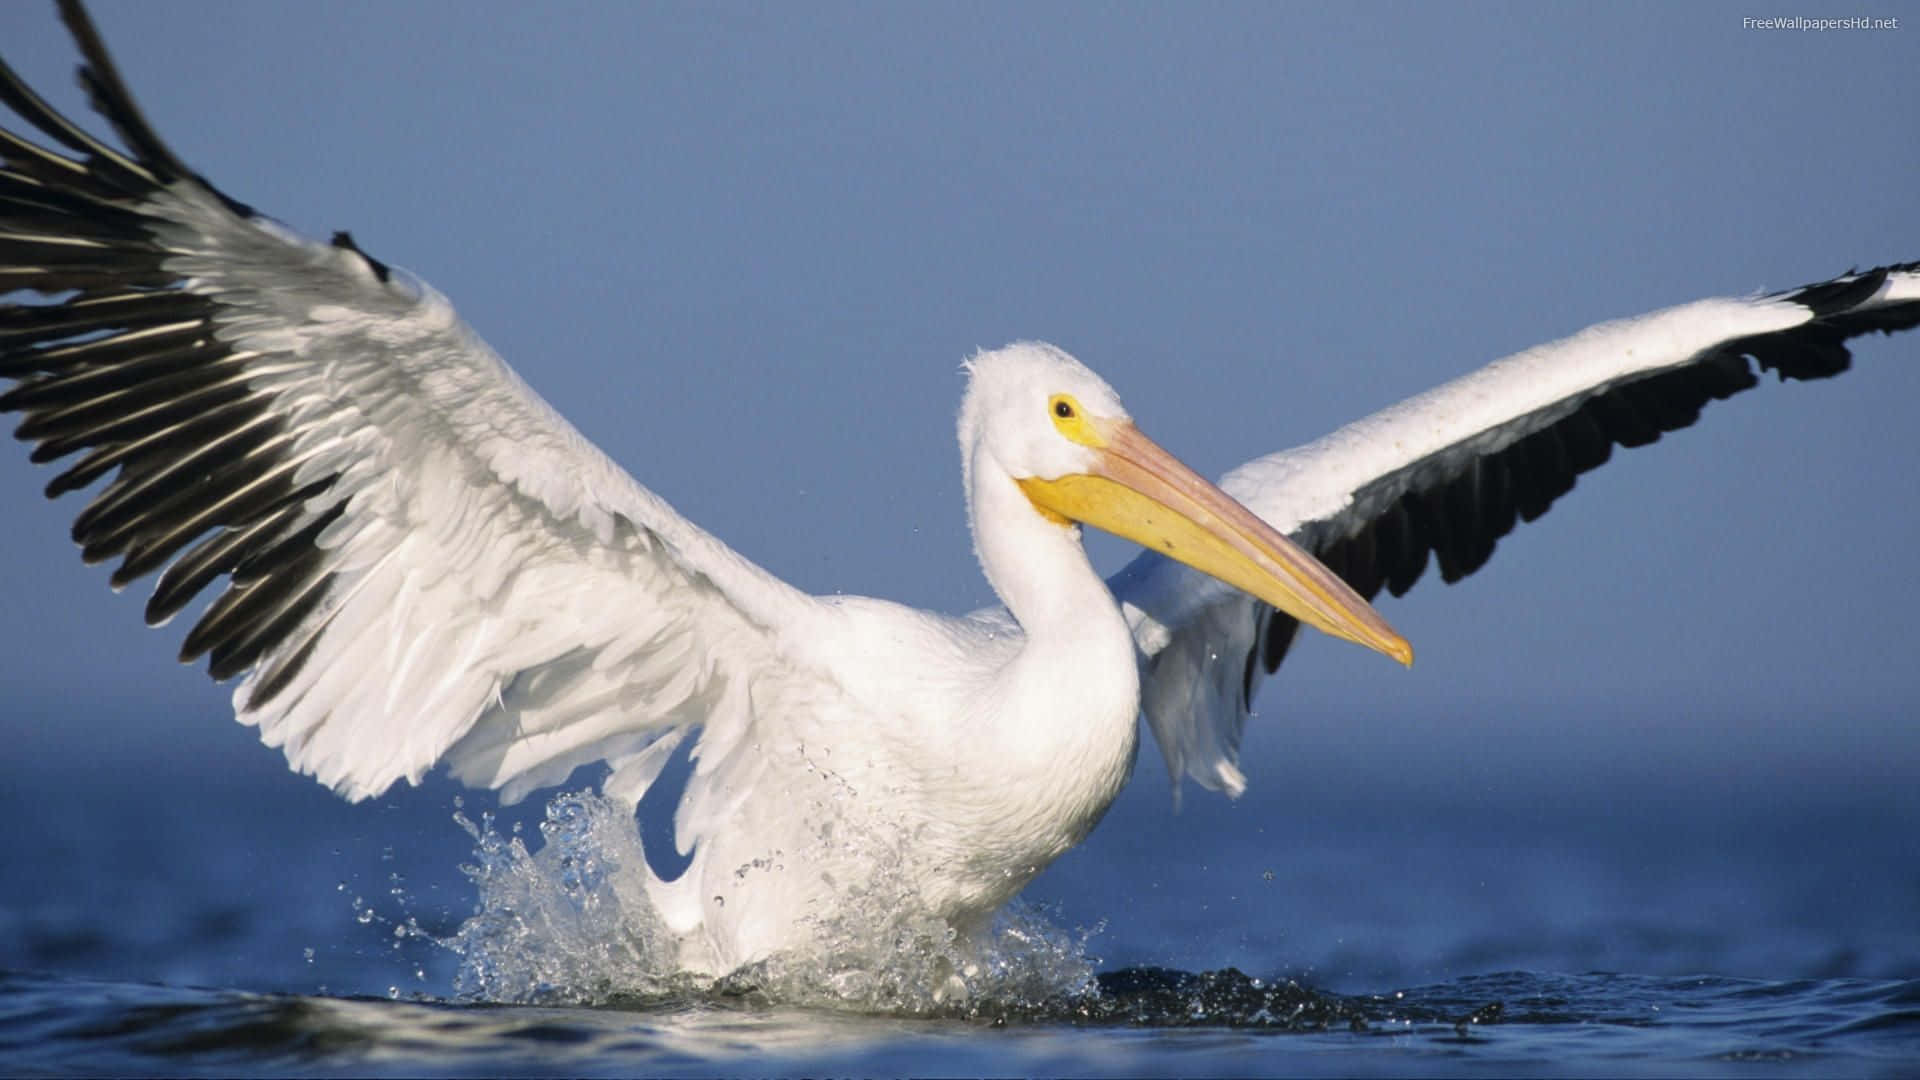 “Wings of Freedom: A flock of pelicans take flight.”